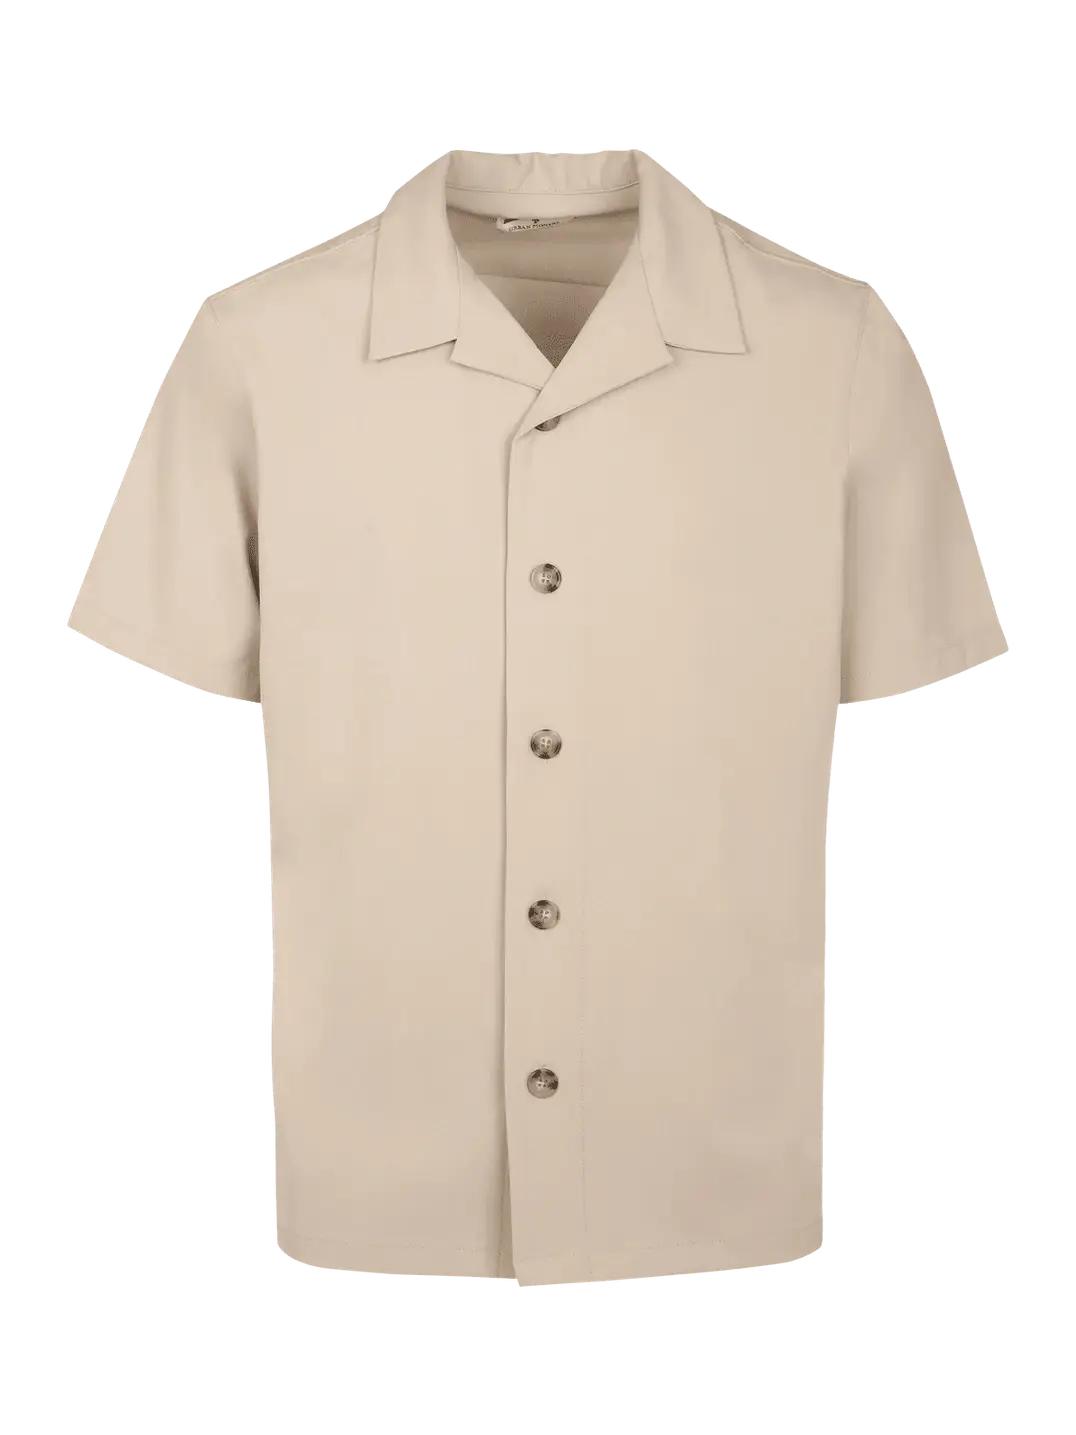  SkjorteUrban Pioneers Baggio Shirt - Khaki